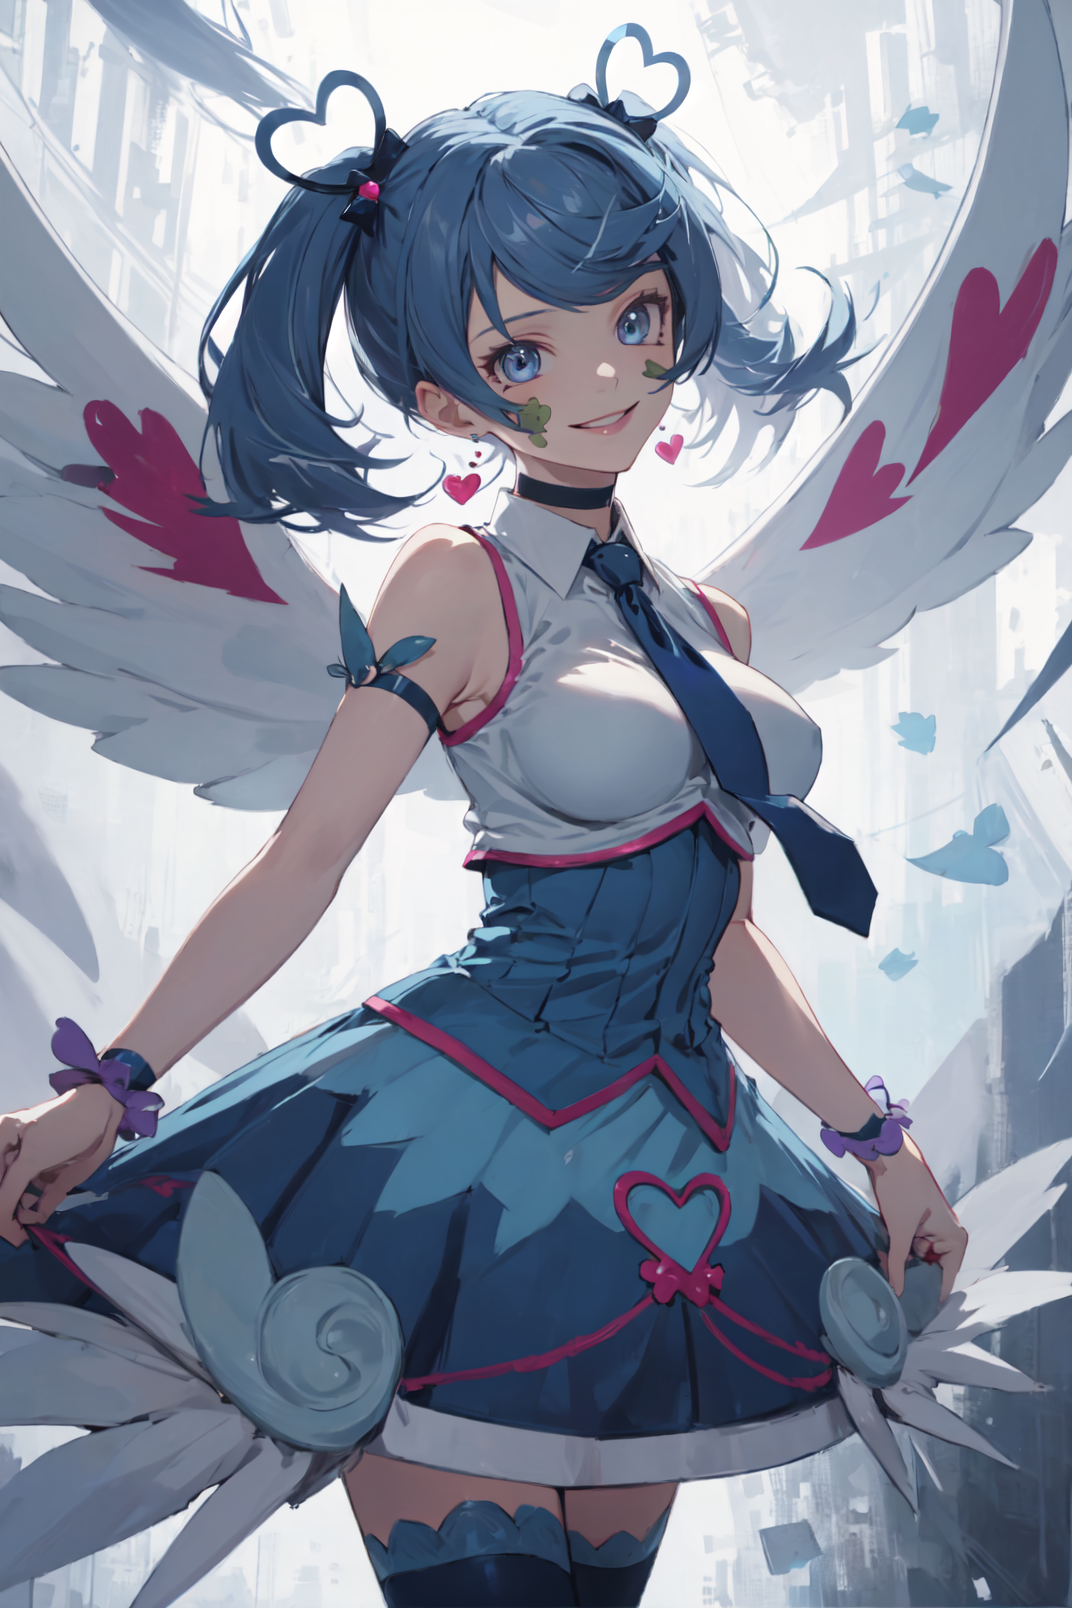 Ai Art] Blue Angel - Yu-Gi-Oh! Vrains by The-Sanctuaire on DeviantArt